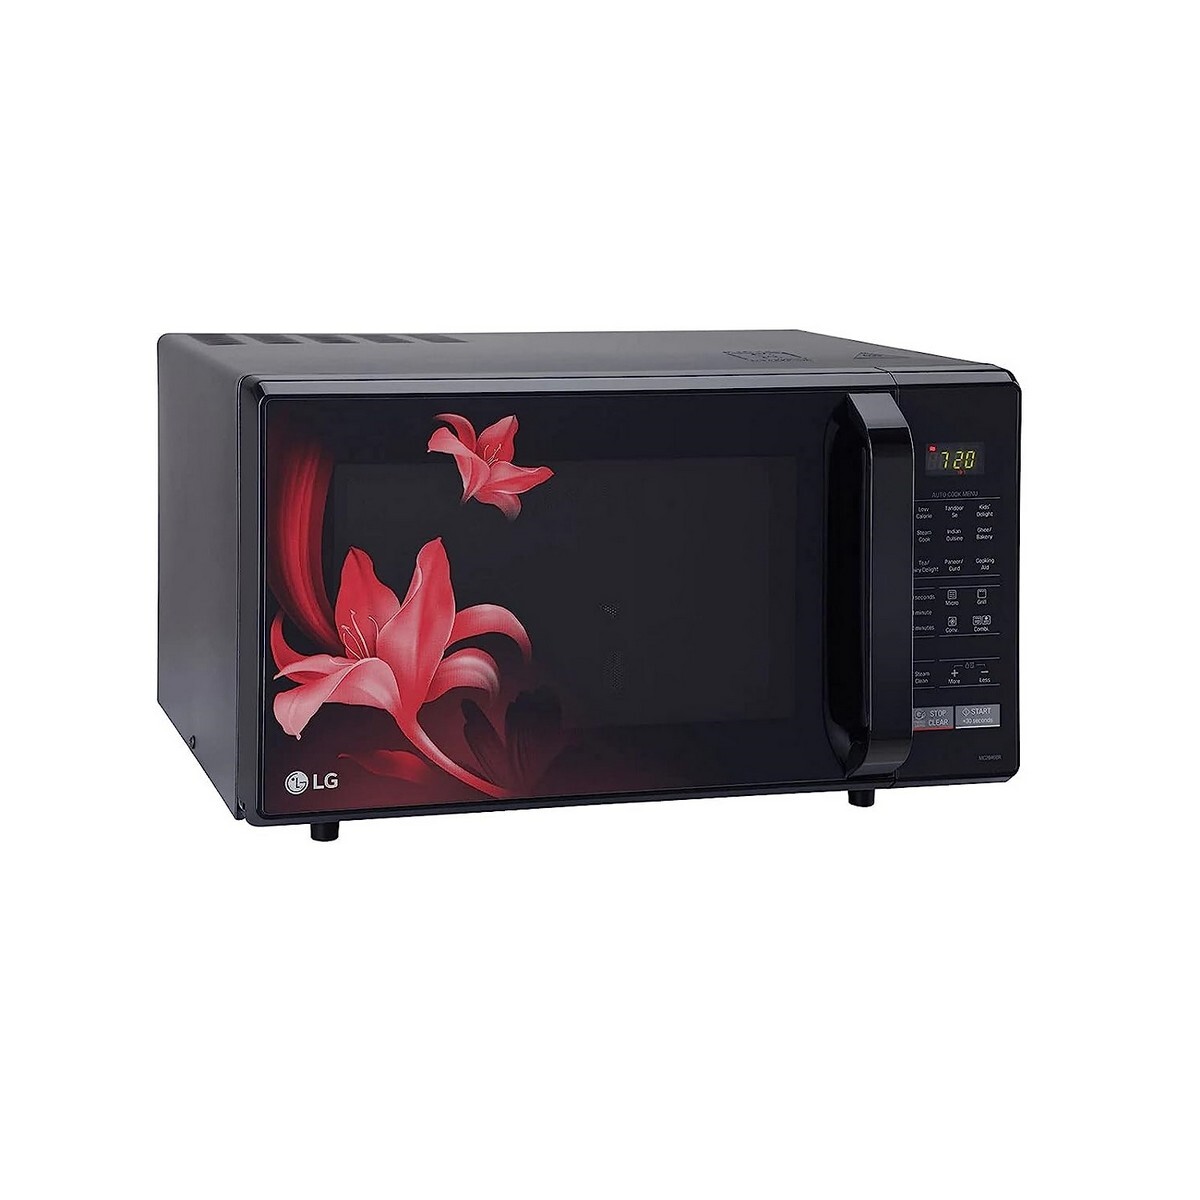 LG 28 L Convection Microwave Oven MC2846BR Black